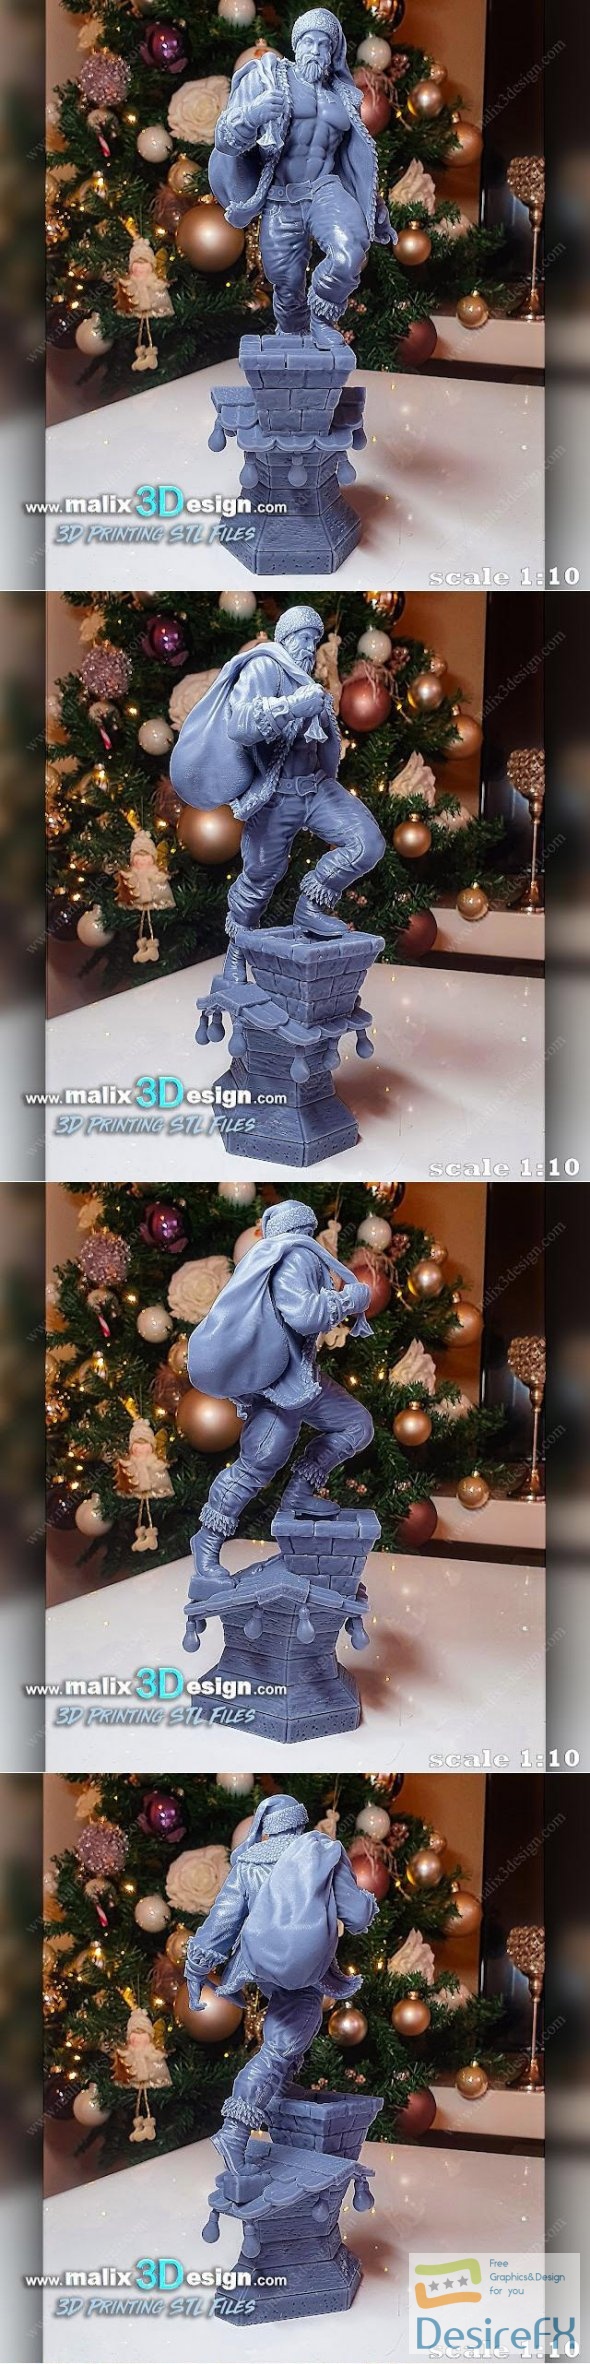 Santa 2020 3D Print